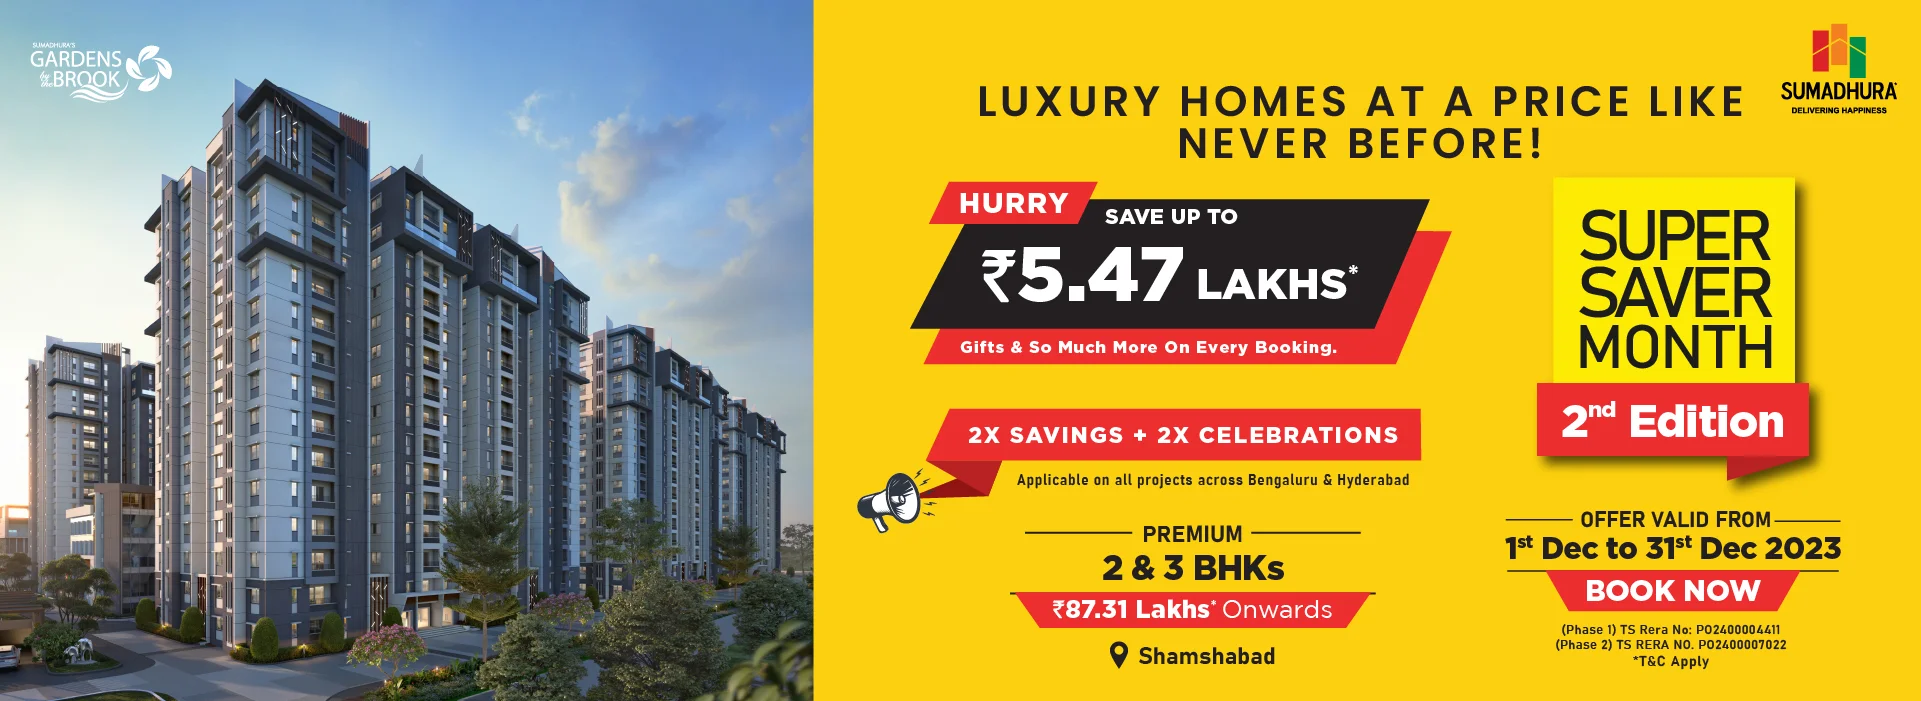 Sumadhura's Super Saver Deals on 2,3 Bhk Apartments in Hyderabad